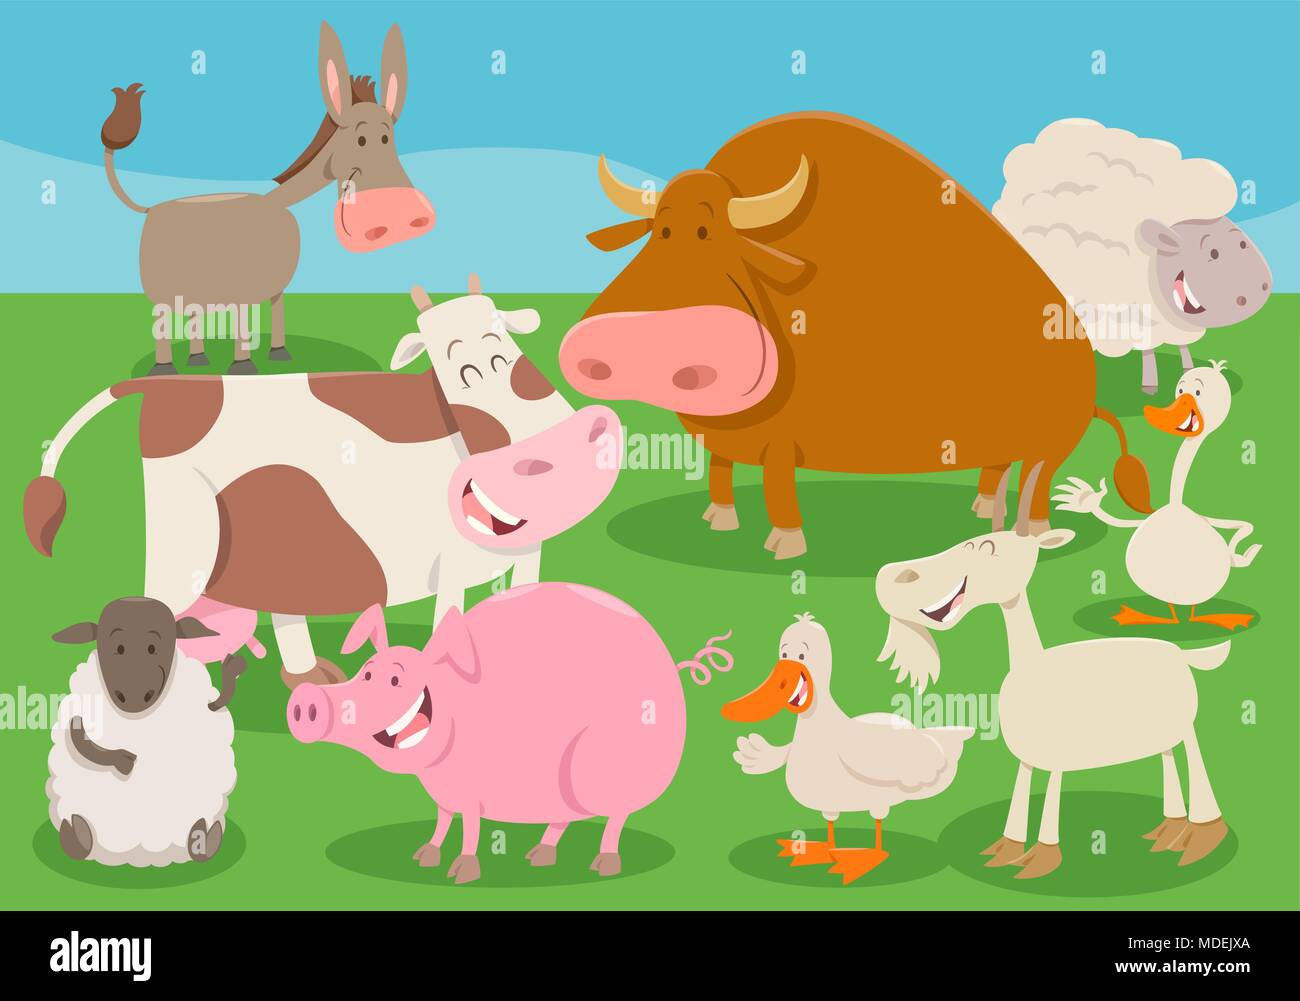 Cartoon Illustration of Farm Animal Livestock Characters Group Stock Vector